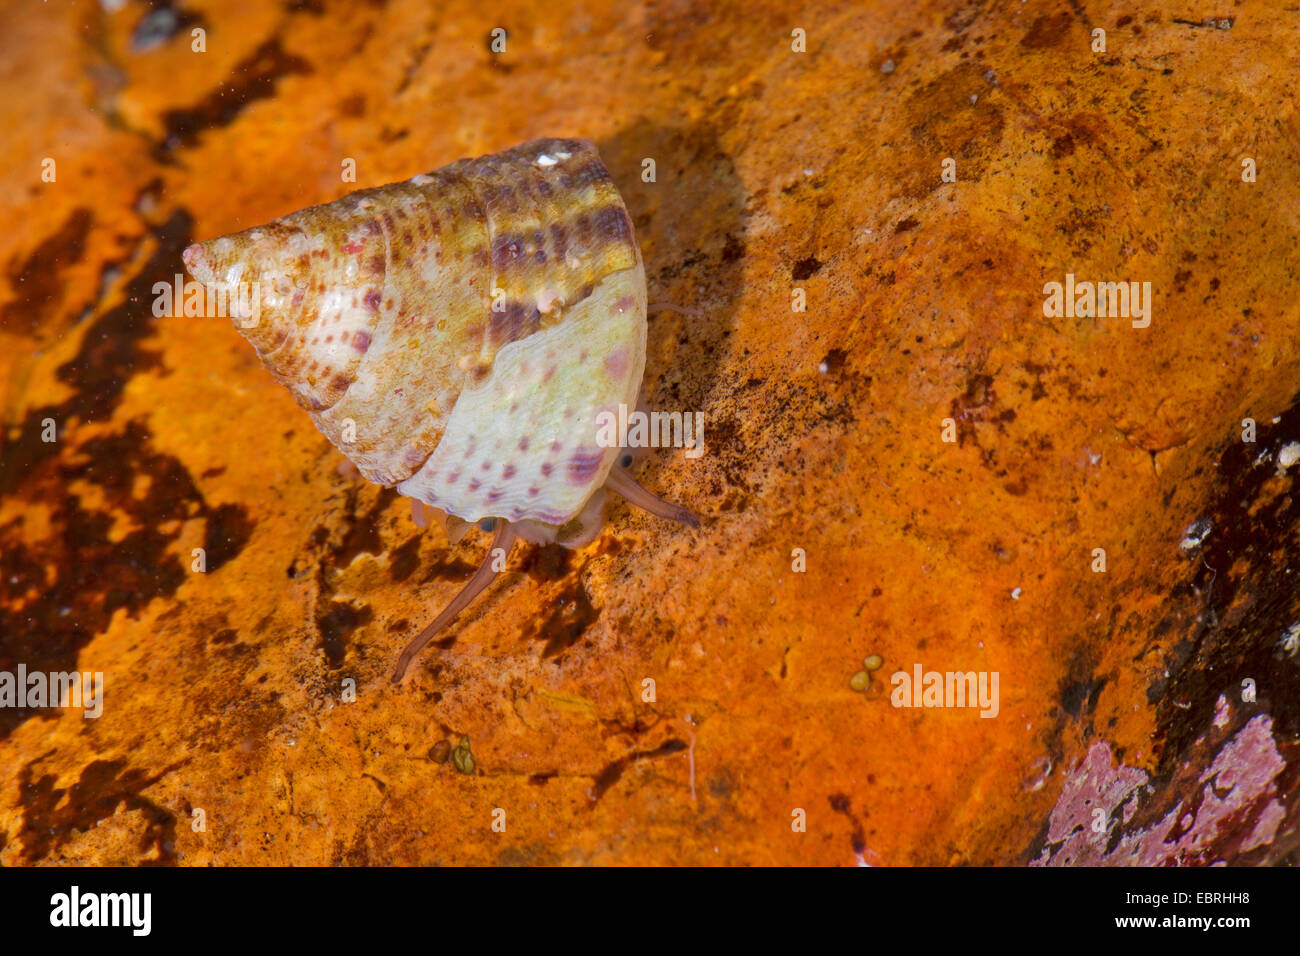 topsnail (Clelandella miliaris, Calliostoma miliaris, Trochus millegranus, Jujubinus miliaris, Ampulotrochus miliaris), creeping on a stone Stock Photo